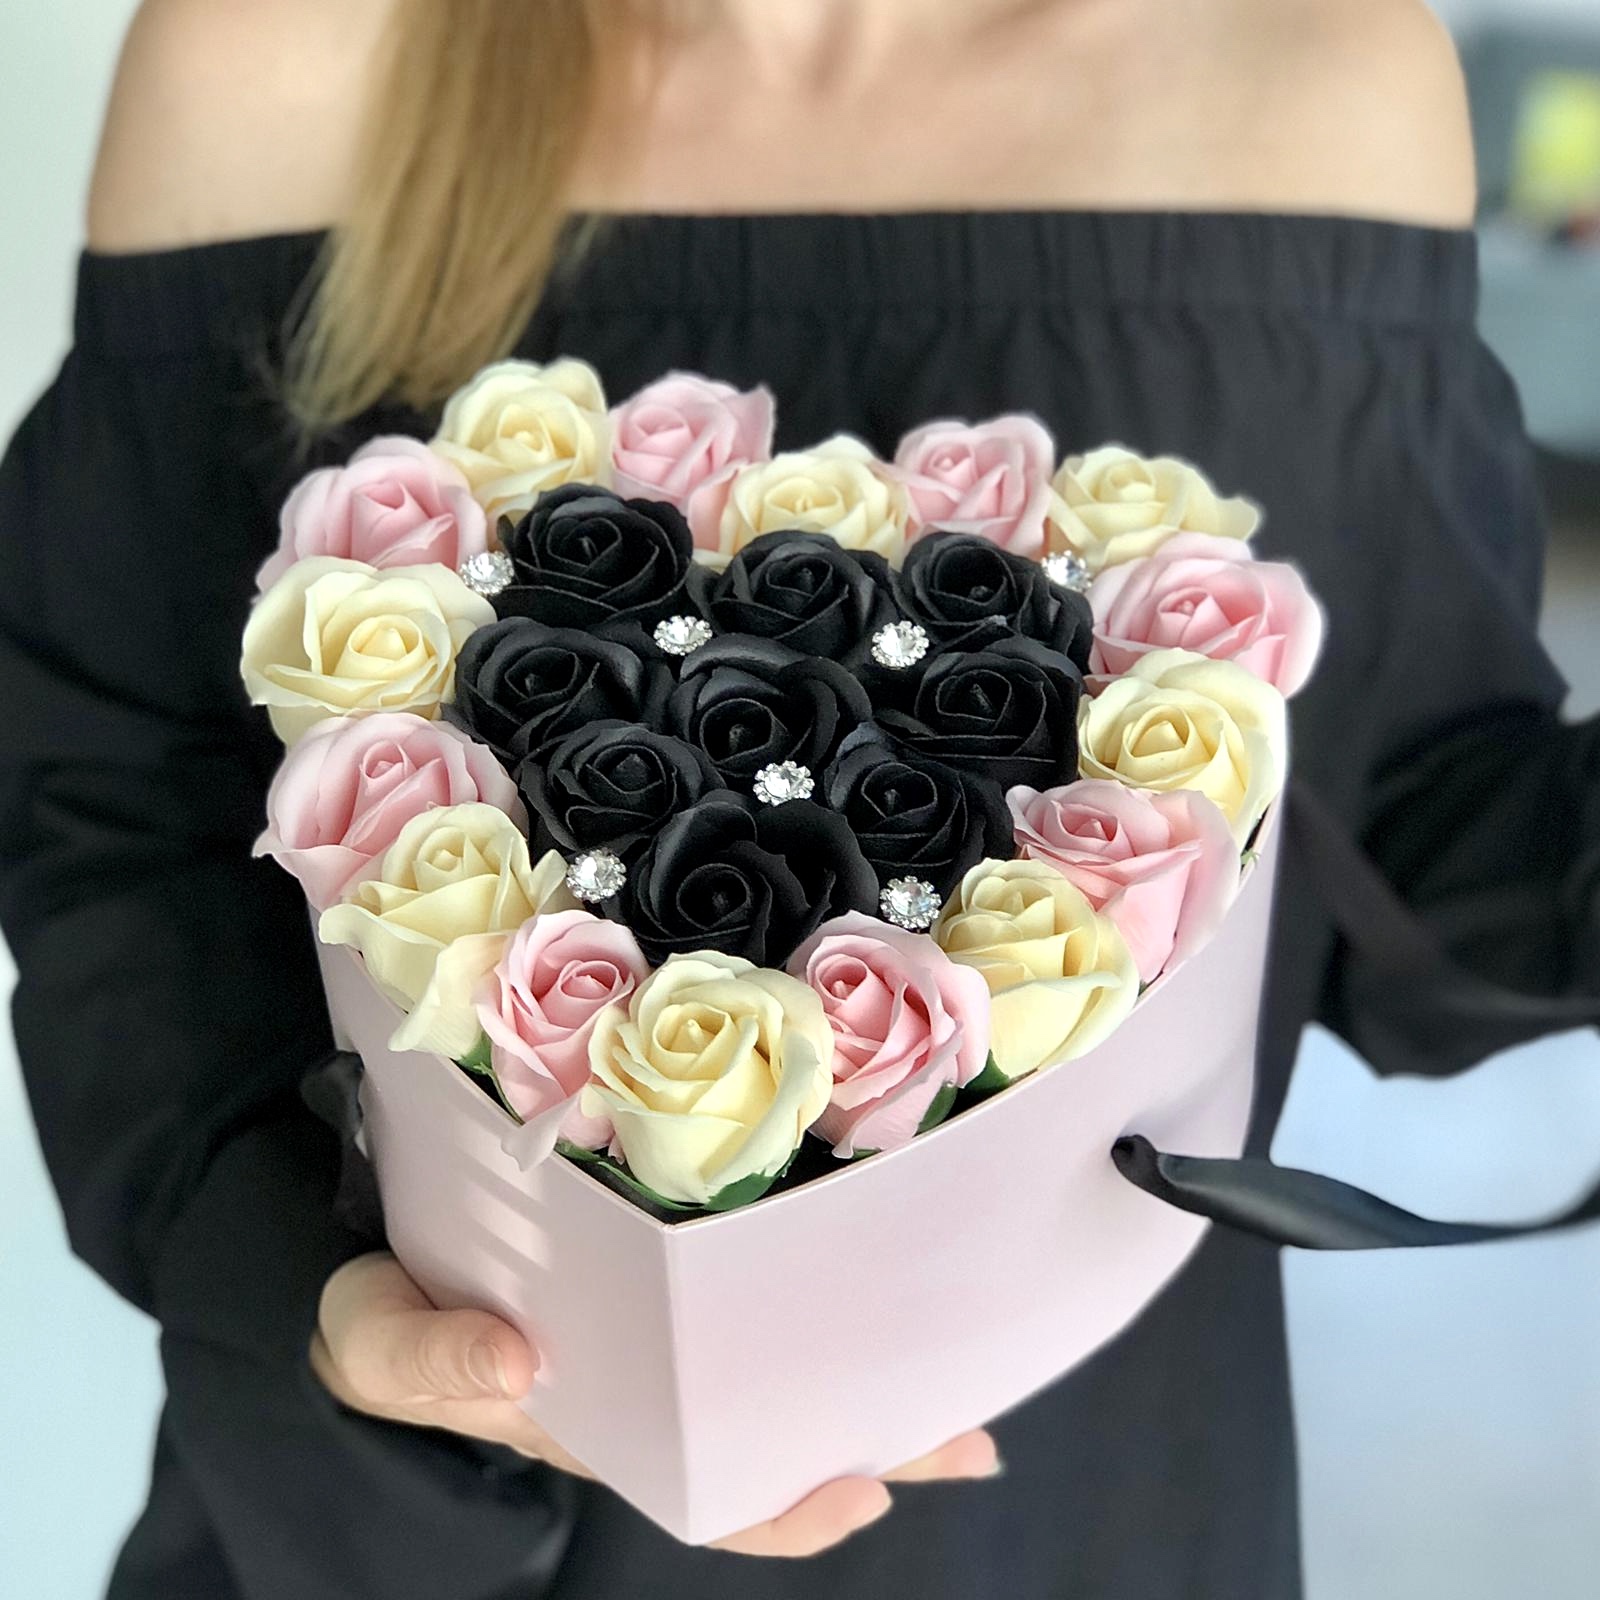 Flower box In Love